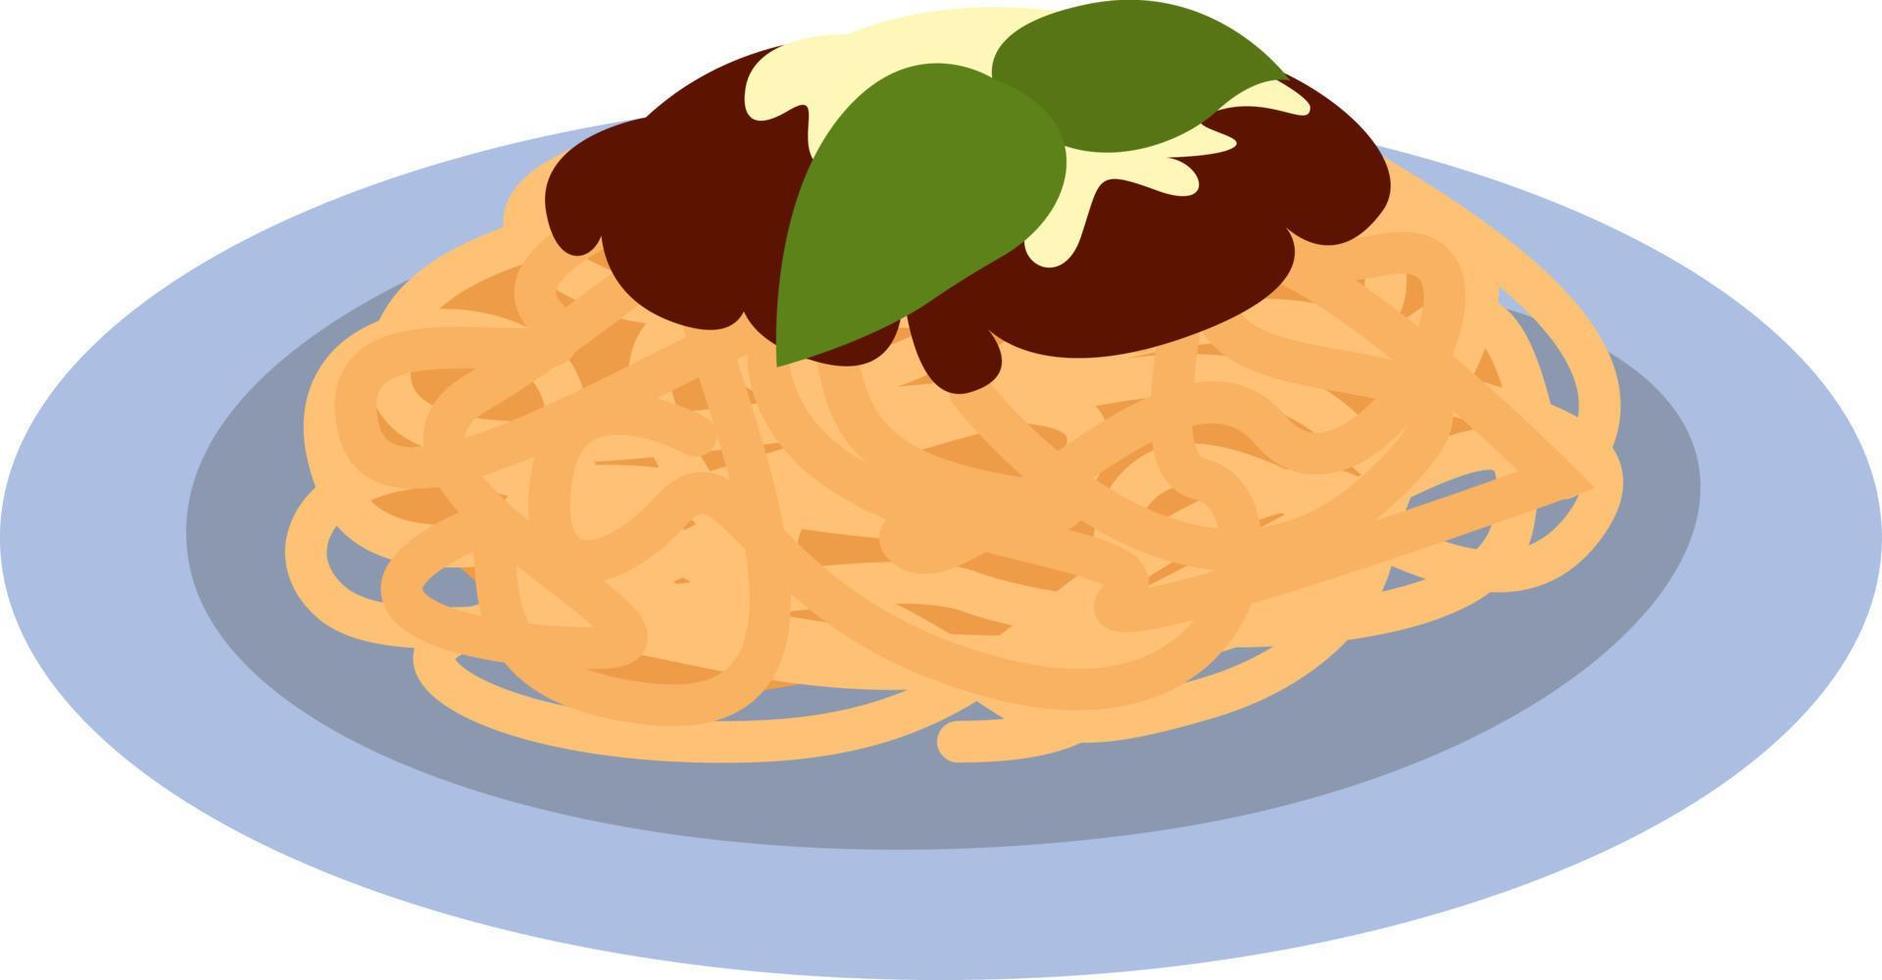 spaghertti bolognese, illustration, vektor på vit bakgrund.